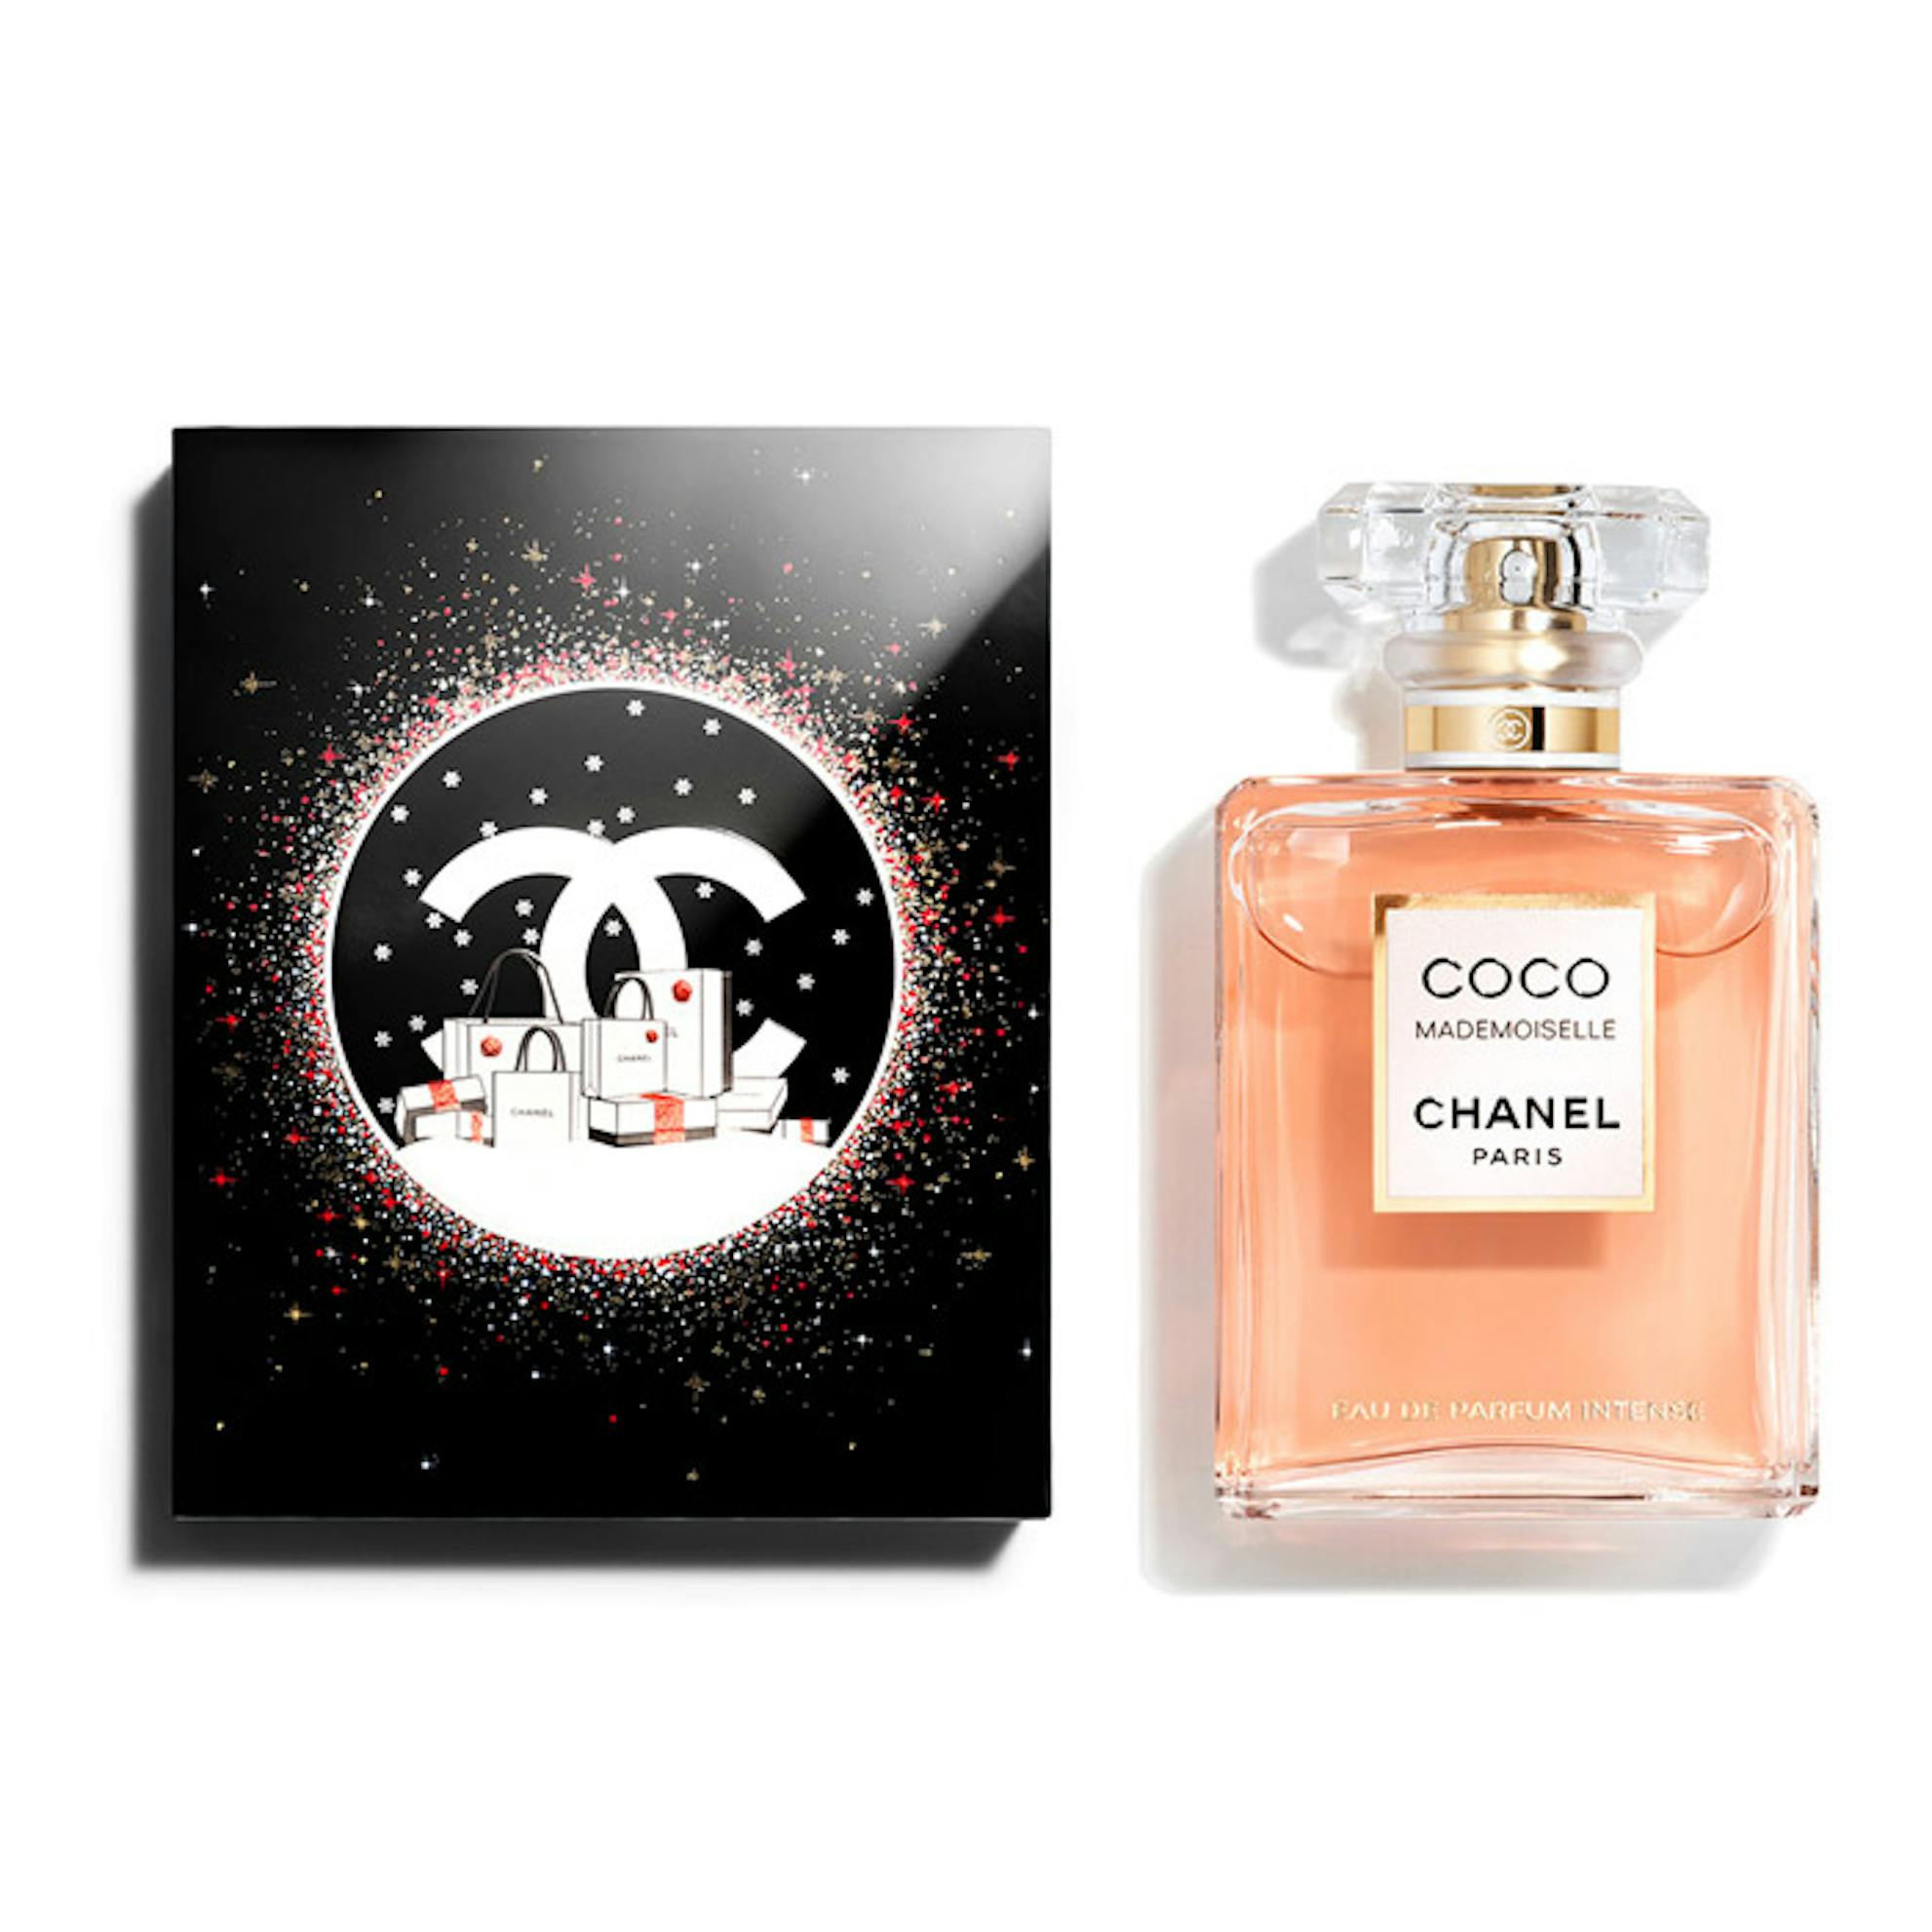 COCO MADEMOISELLE Body Lotion Set Perfume - Chanel  Chanel gift sets, Coco  mademoiselle, Luxury perfume